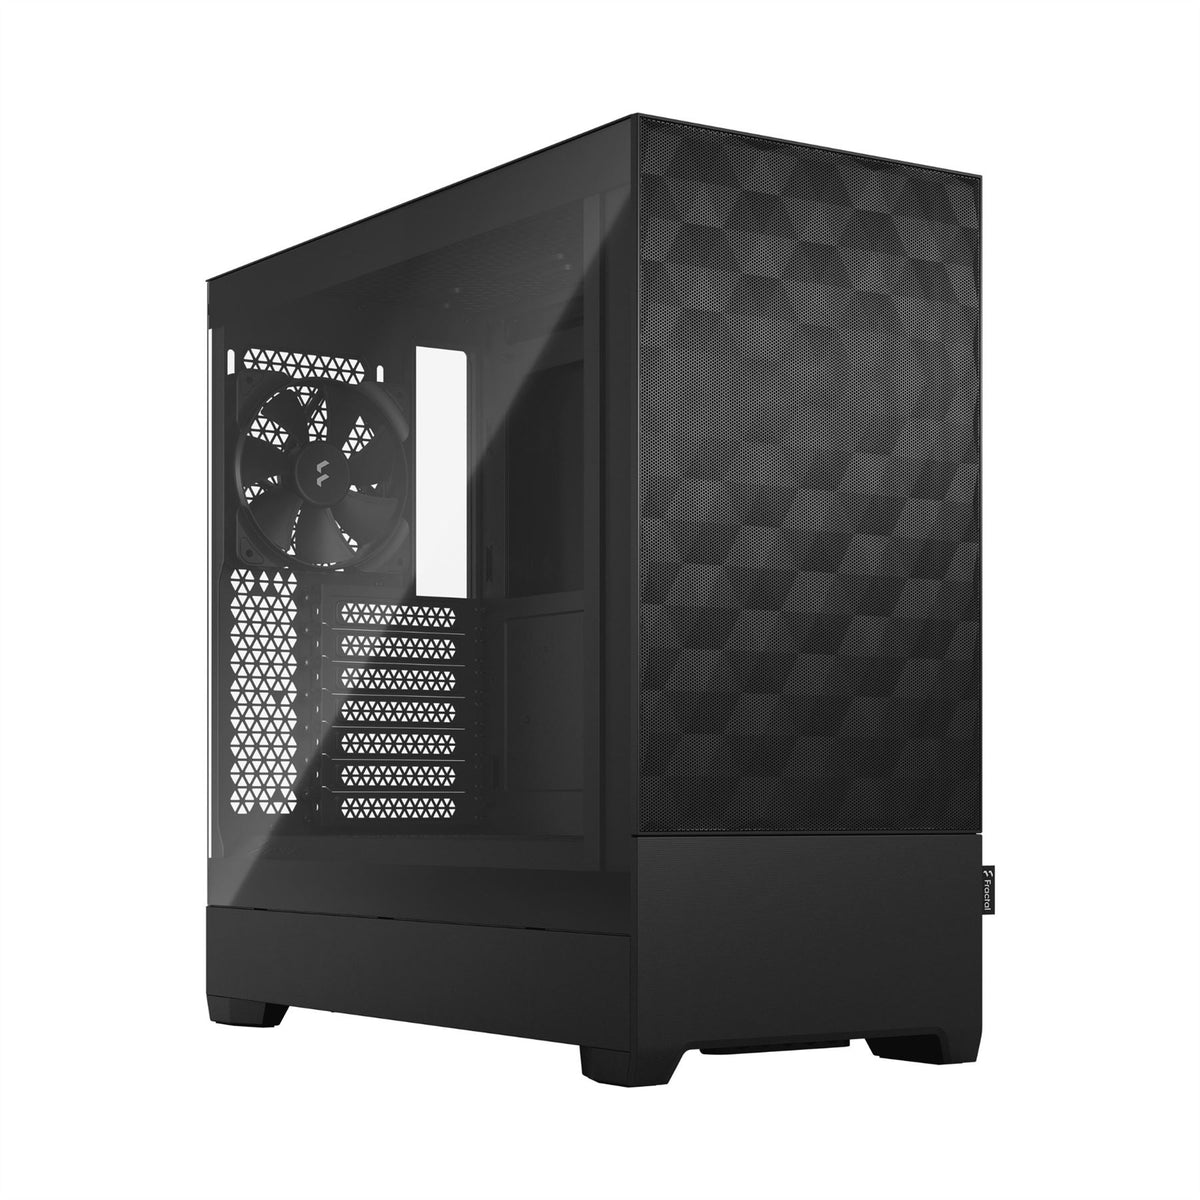 Fractal Design Pop Air Tower Black PC Case